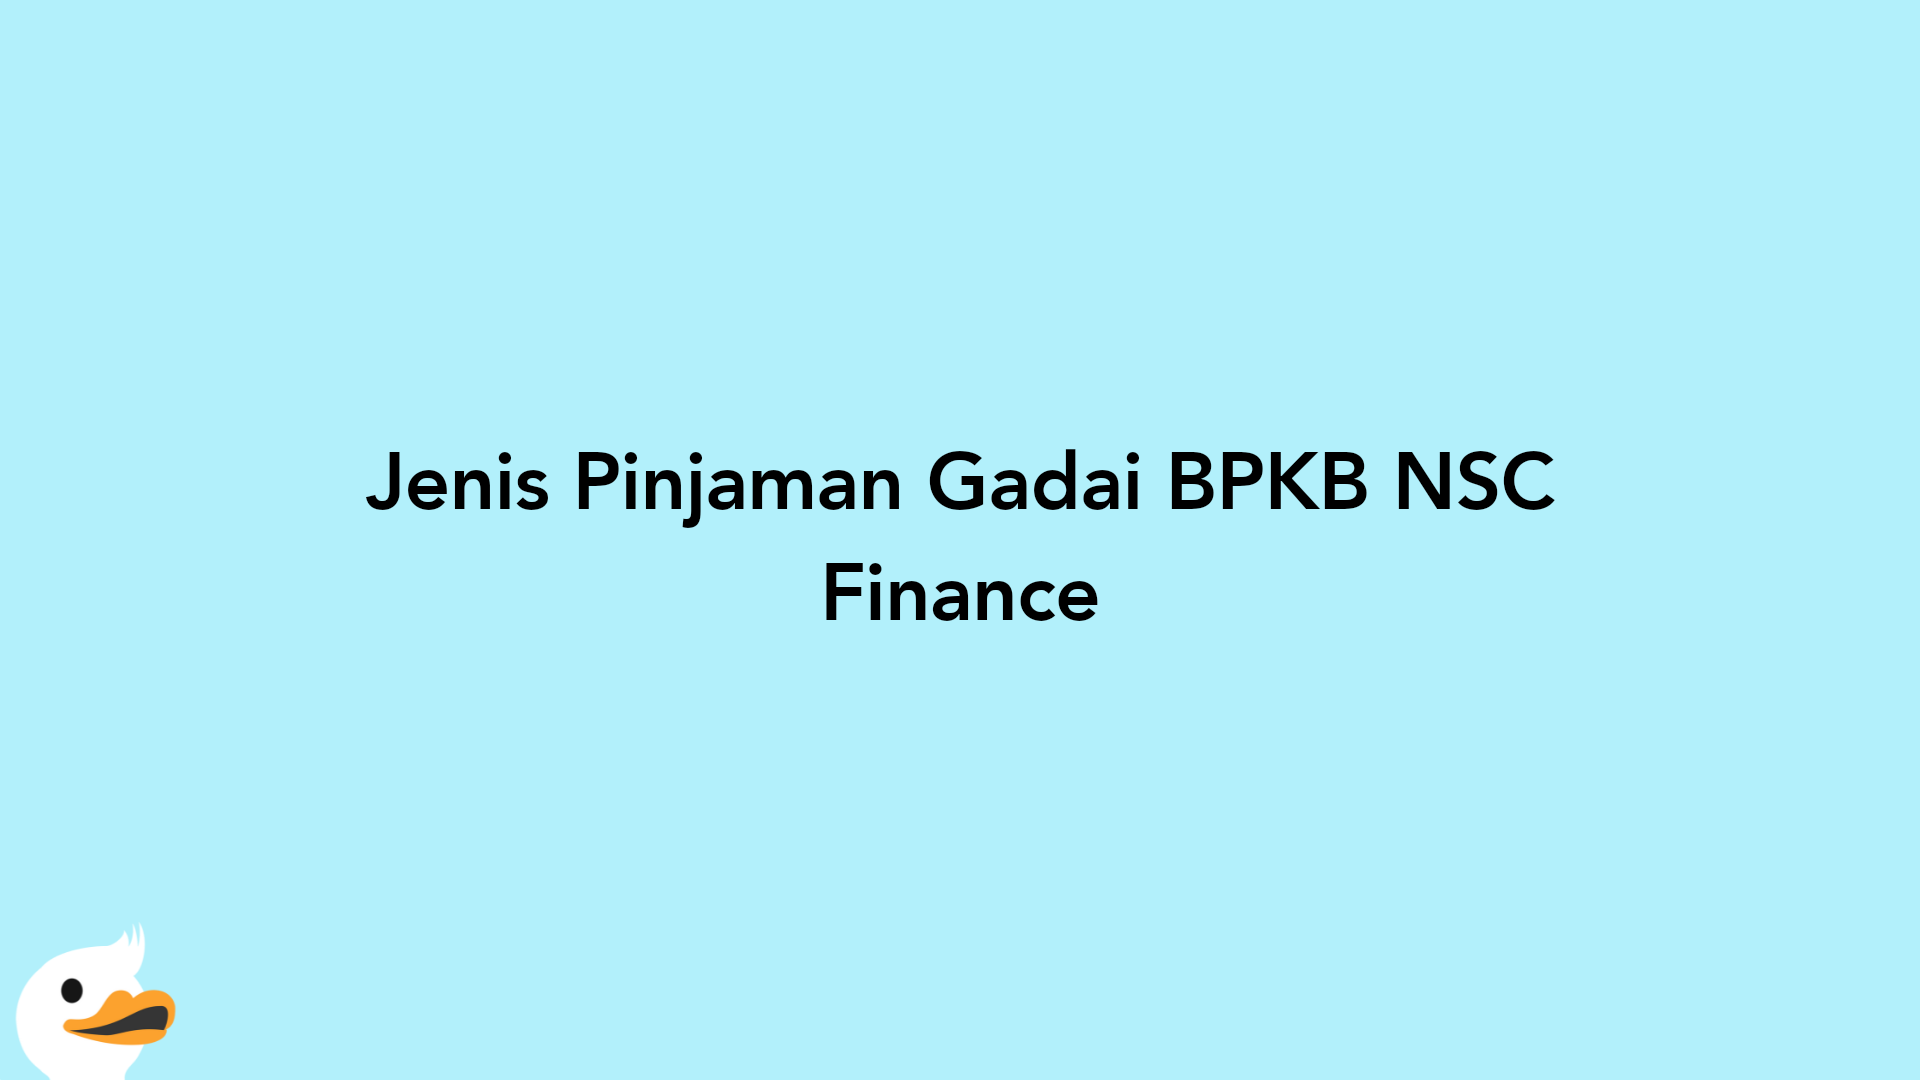 Jenis Pinjaman Gadai BPKB NSC Finance